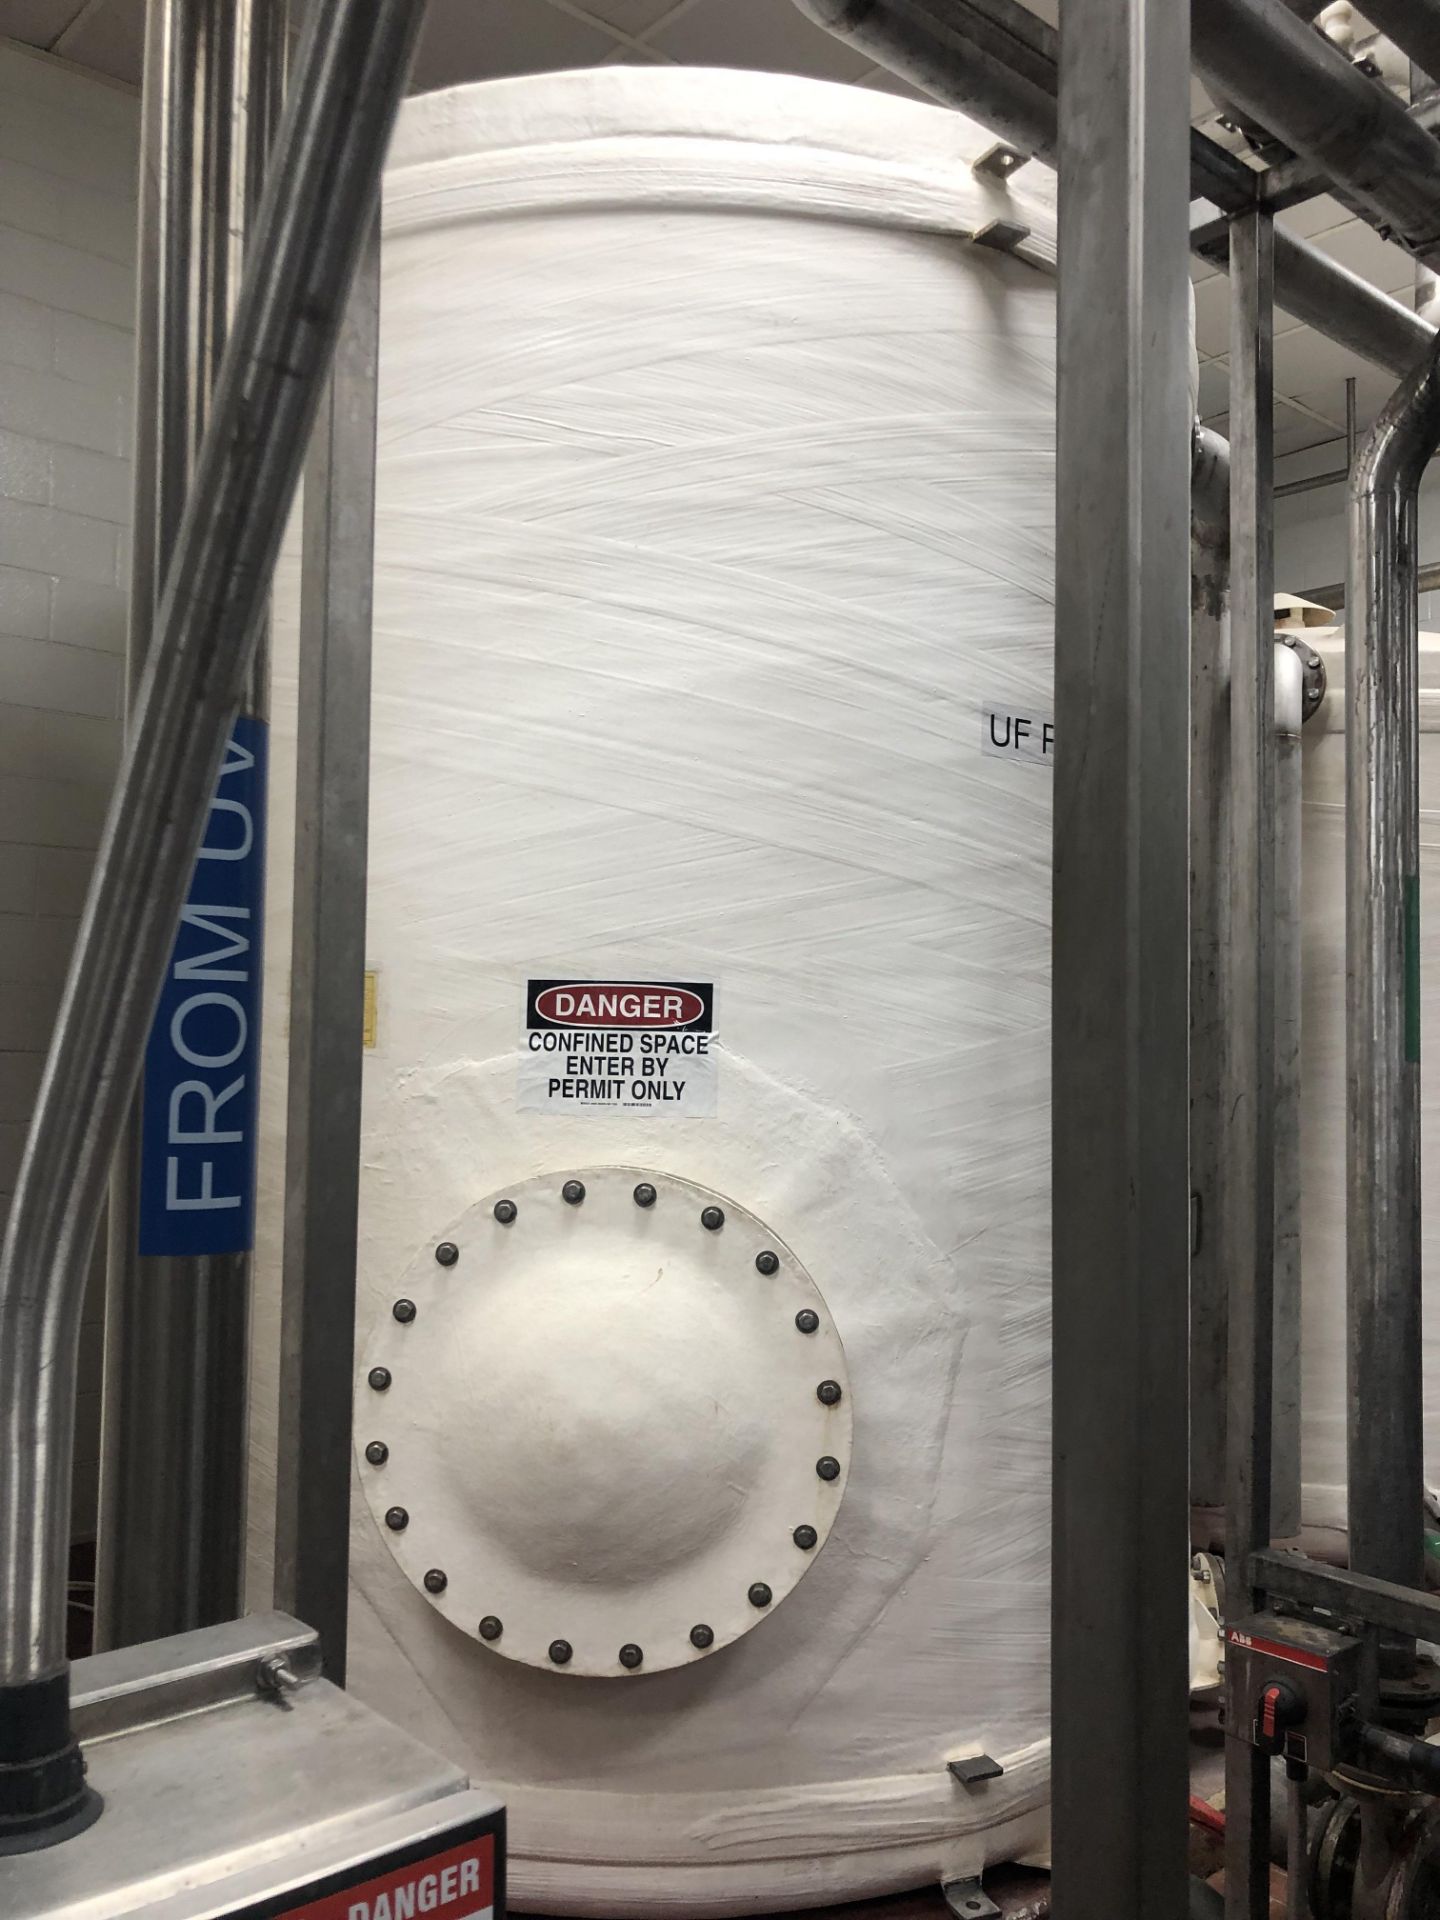 GPI 3950 Gallon Vertical Water Storage Tank